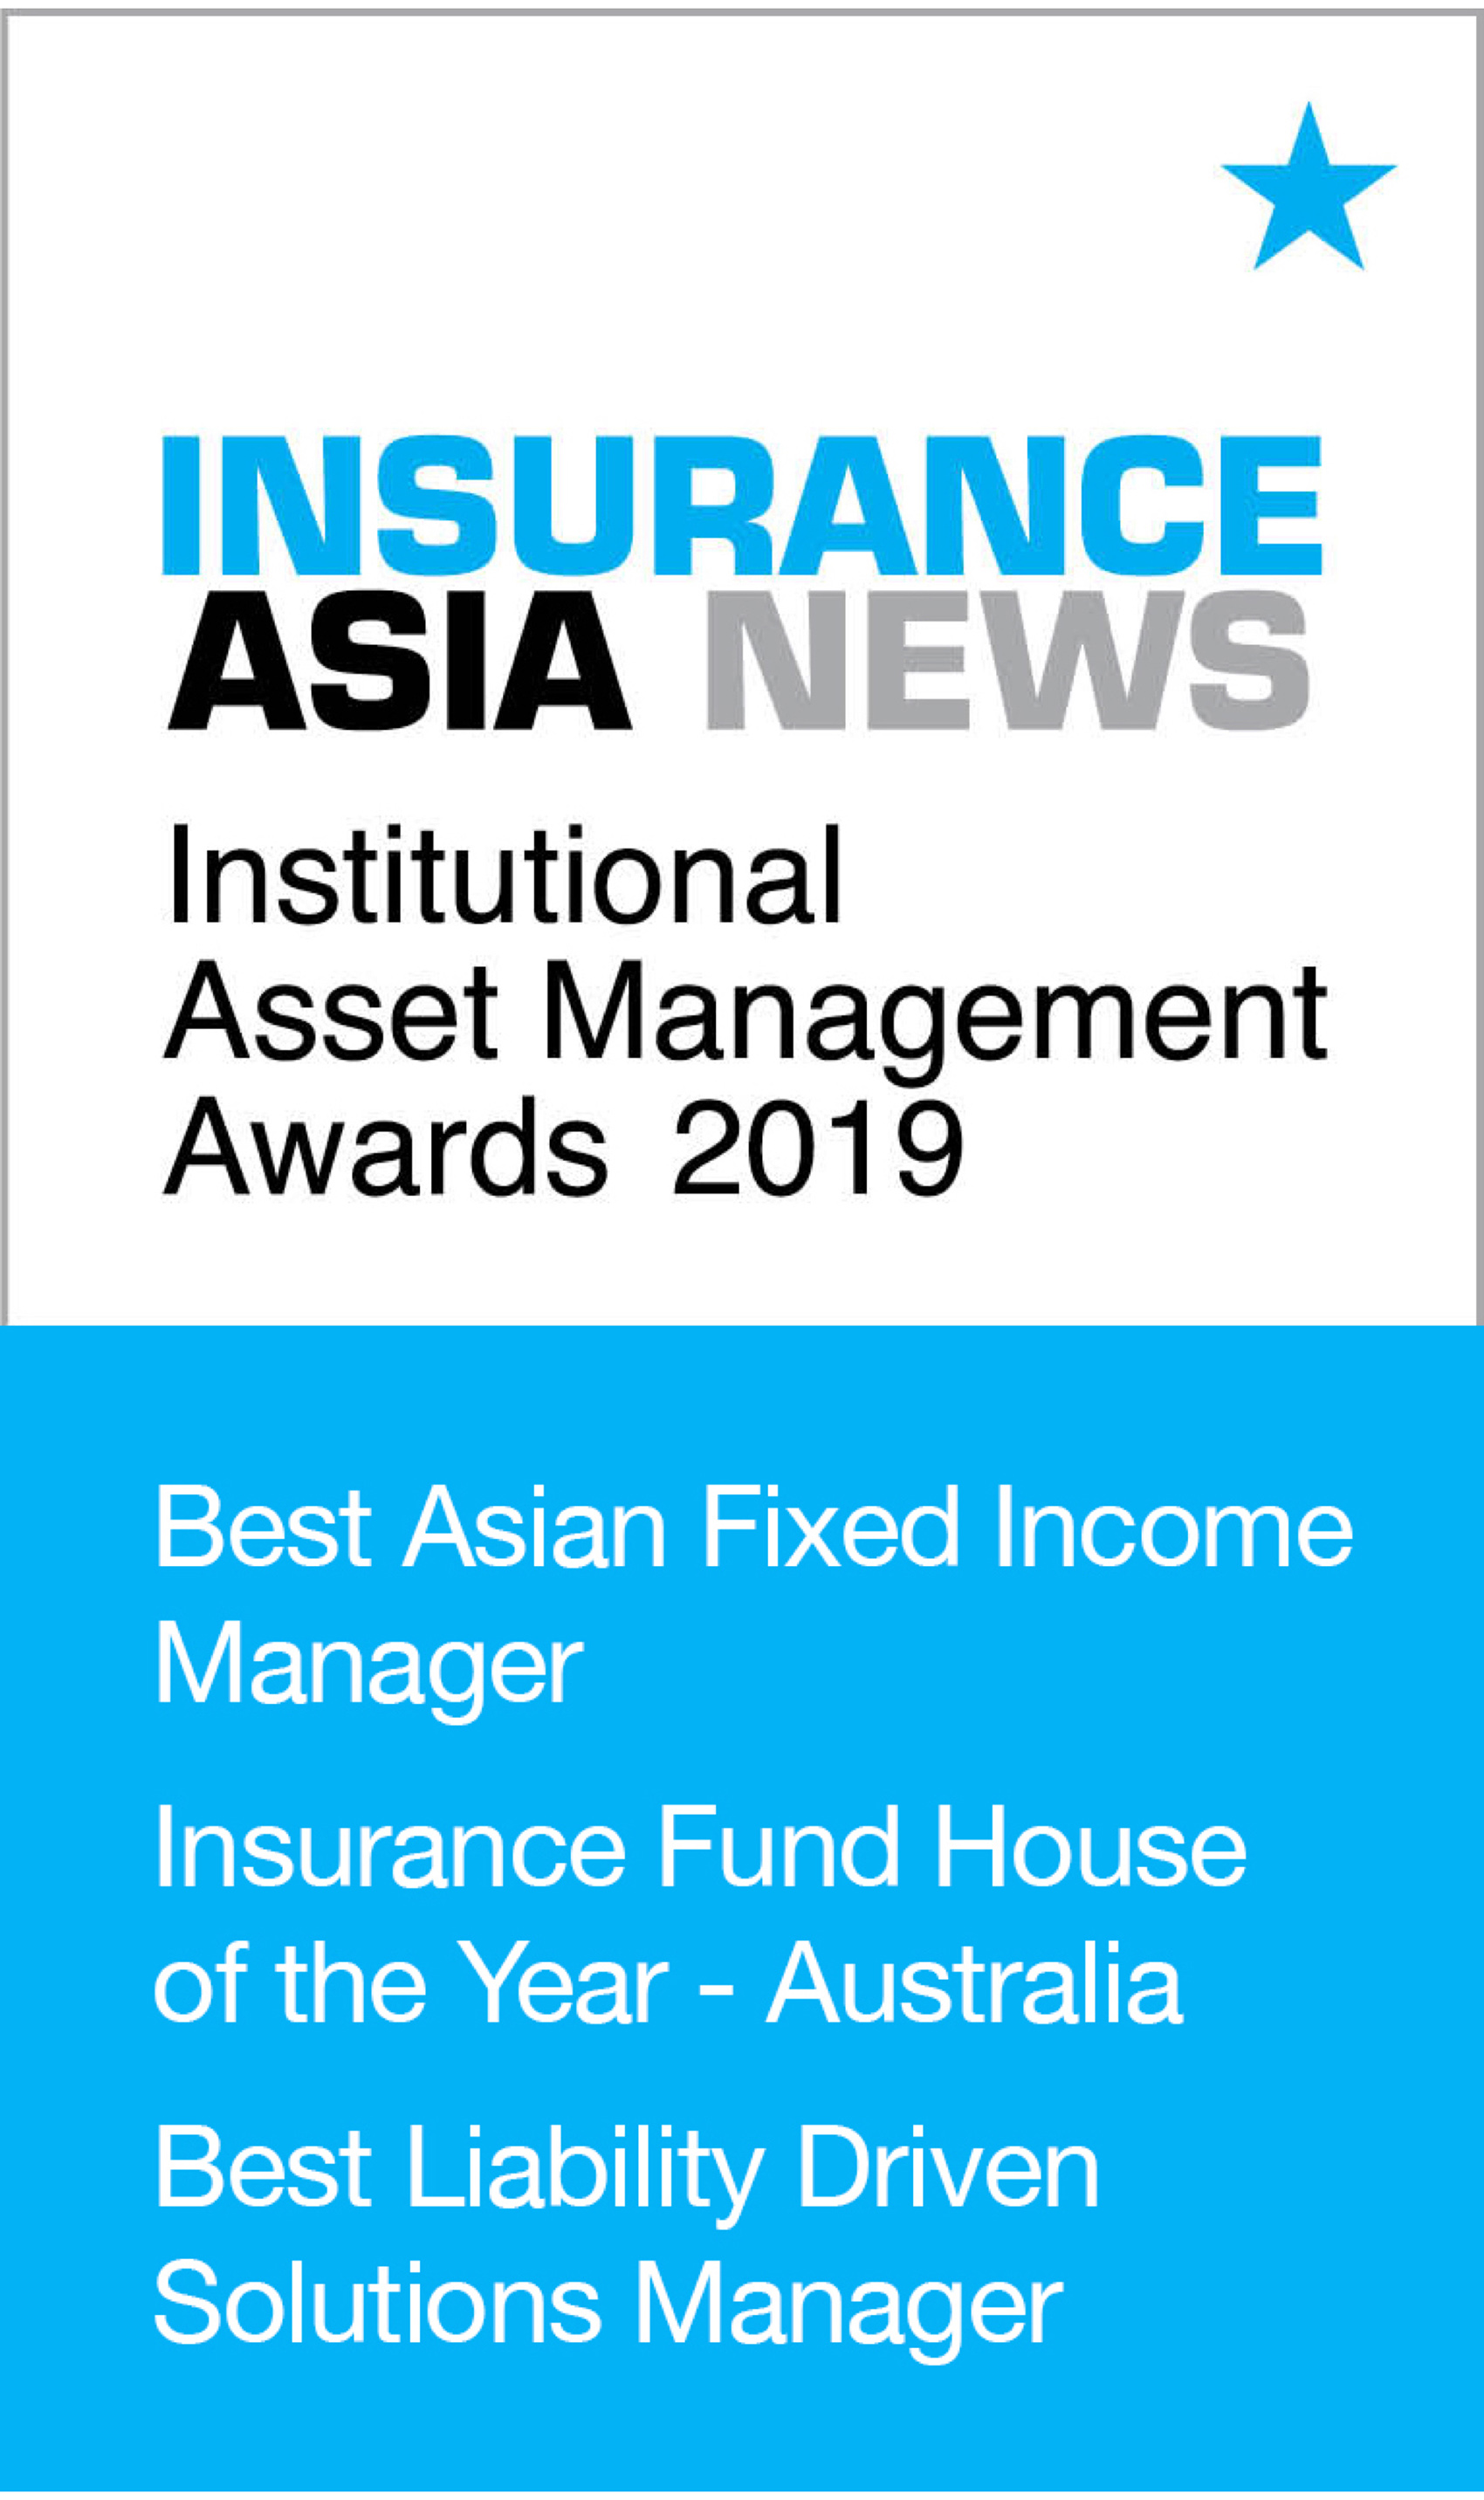 2019 Insurance Asia News